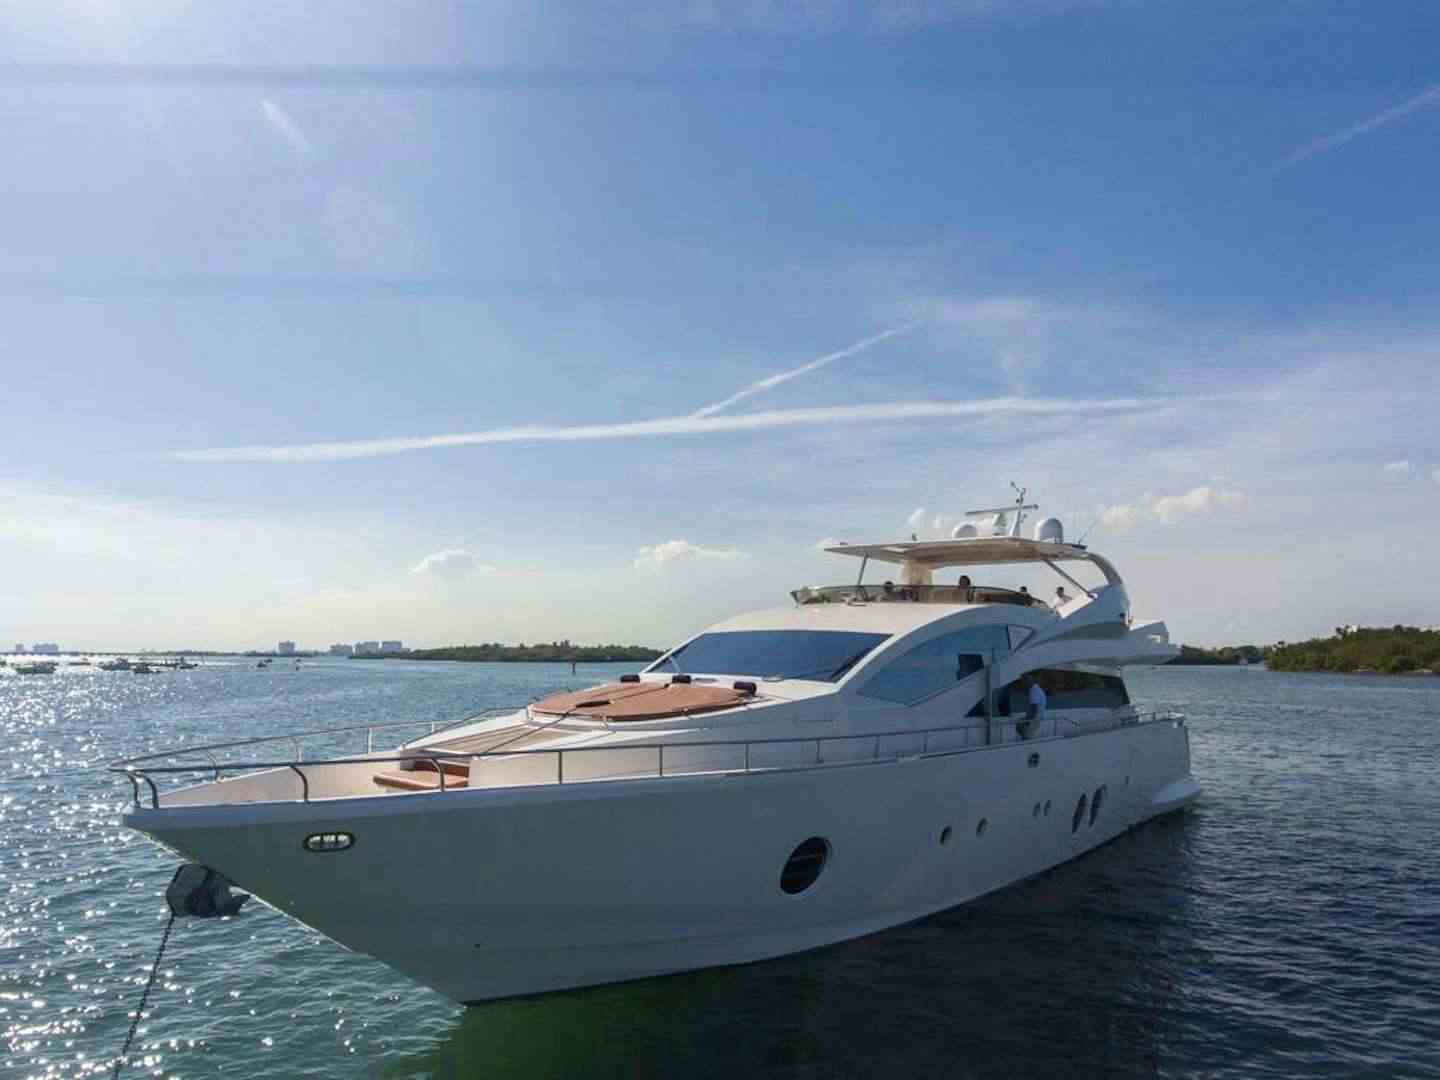 blu ocean - Yacht Charter Chesapeake Bay & Boat hire in US East Coast, Bahamas & Mexico 1